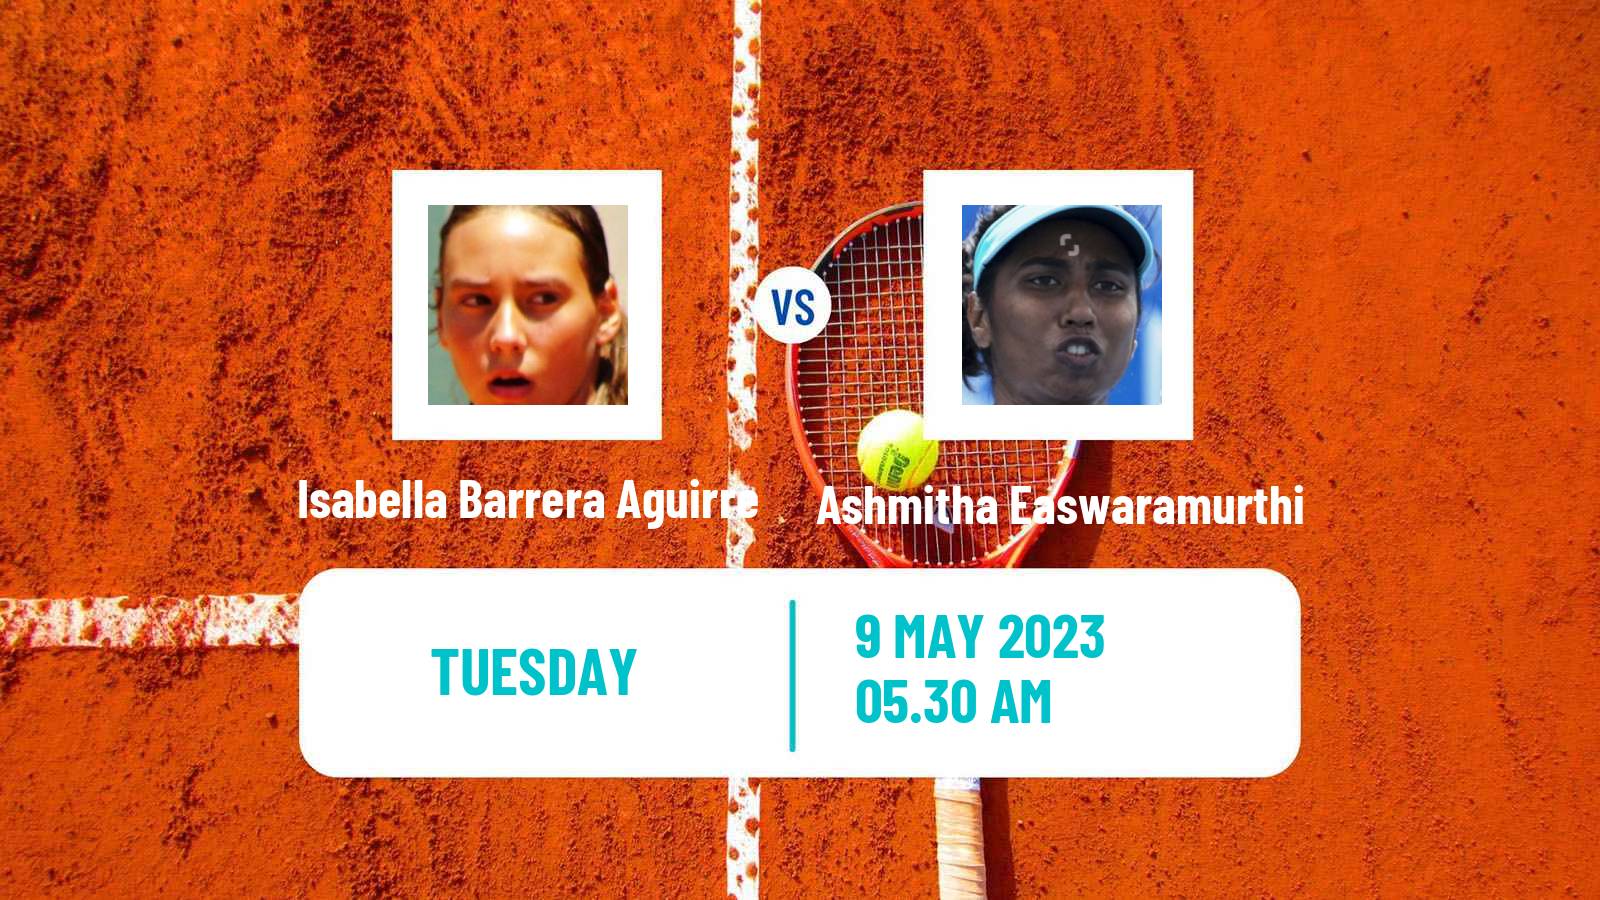 Tennis ITF Tournaments Isabella Barrera Aguirre - Ashmitha Easwaramurthi